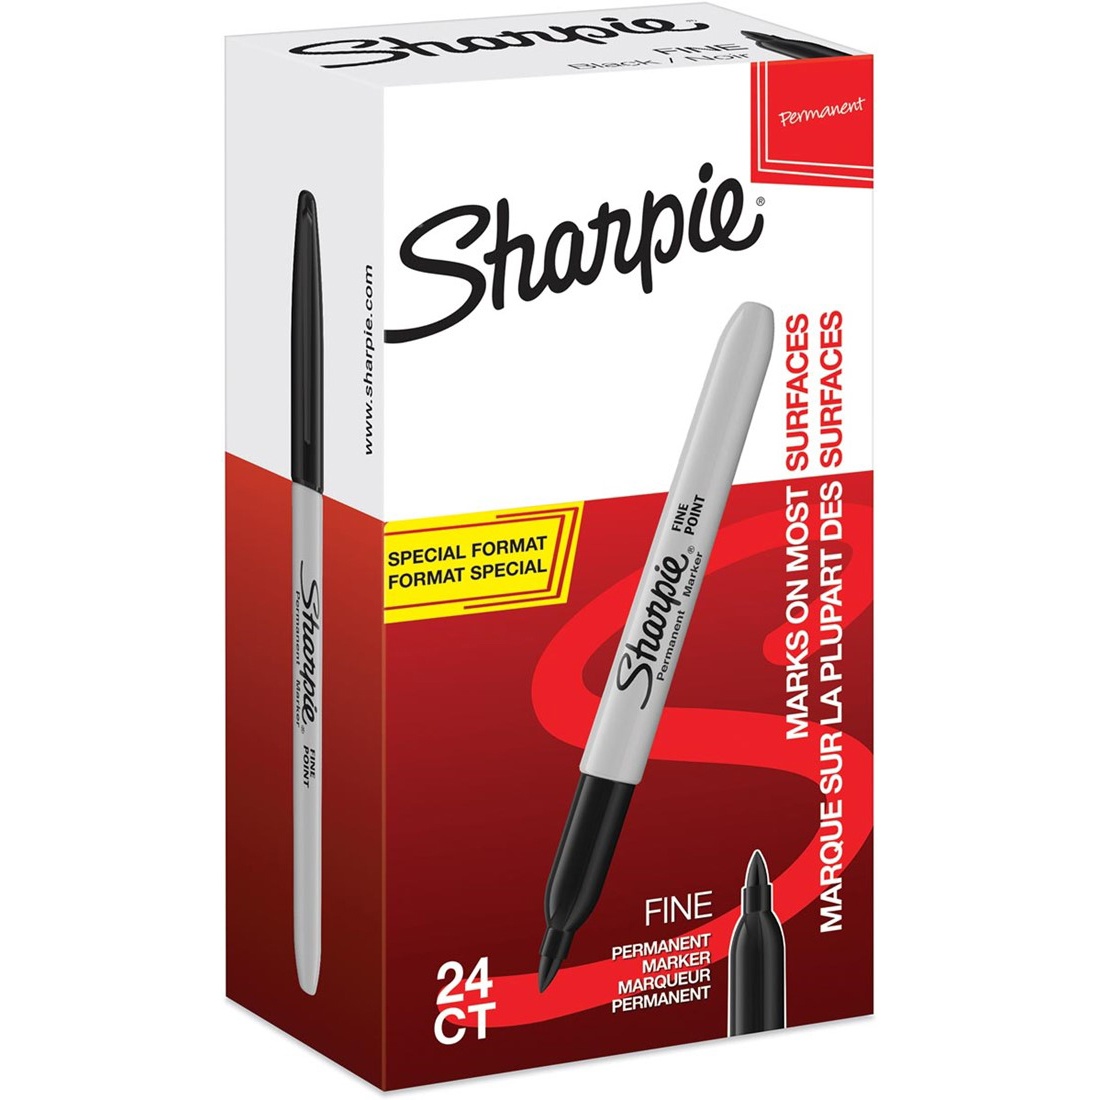 Fine Point White Gel Pen For Artists Black Sketch Pad Mini 2 pack